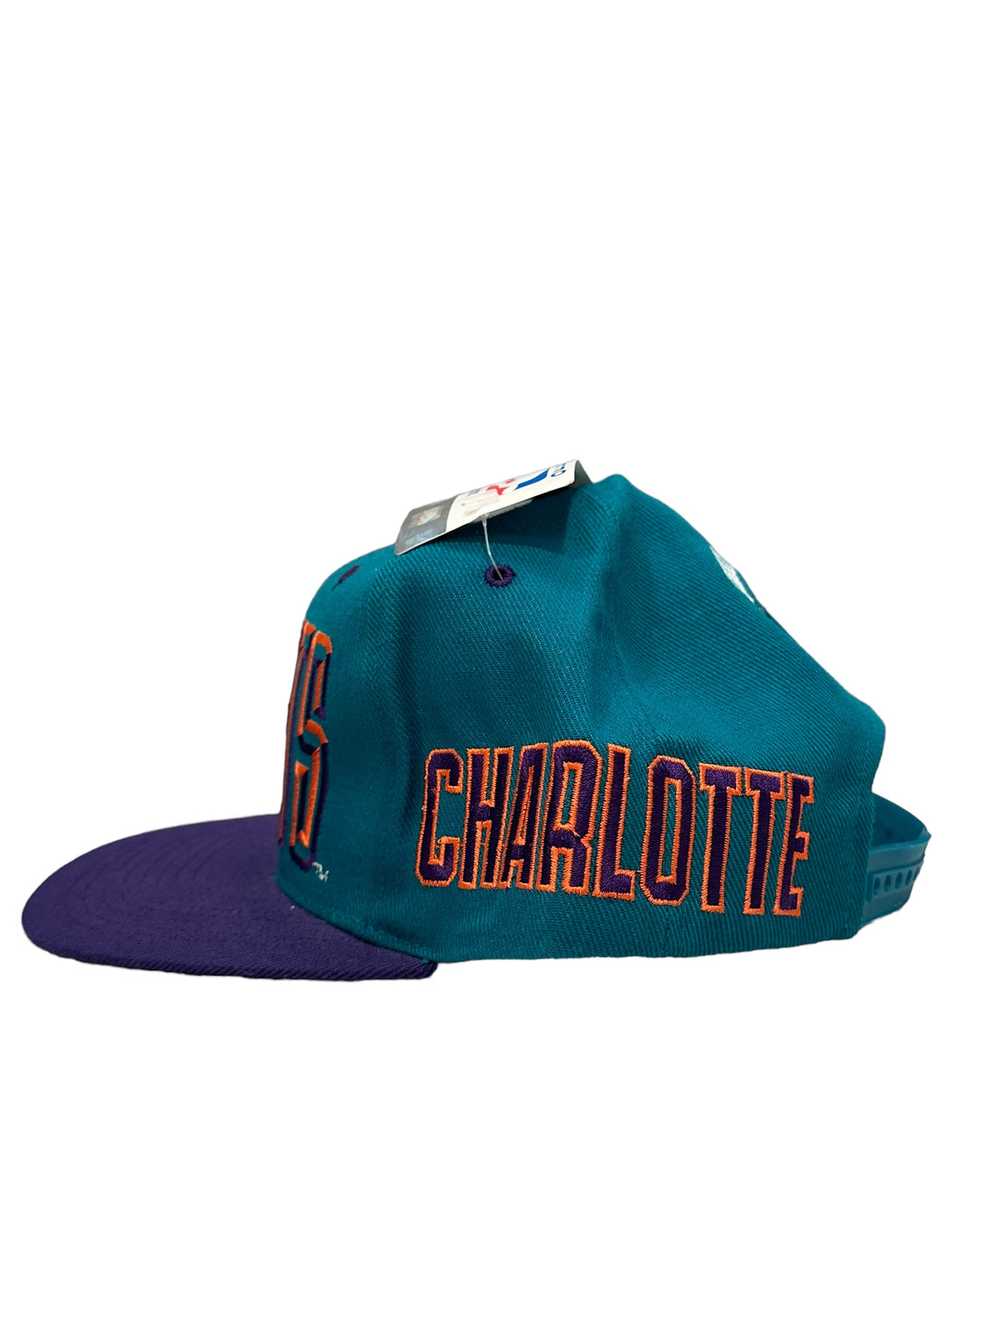 Charlotte Hornets SnapBack - image 2